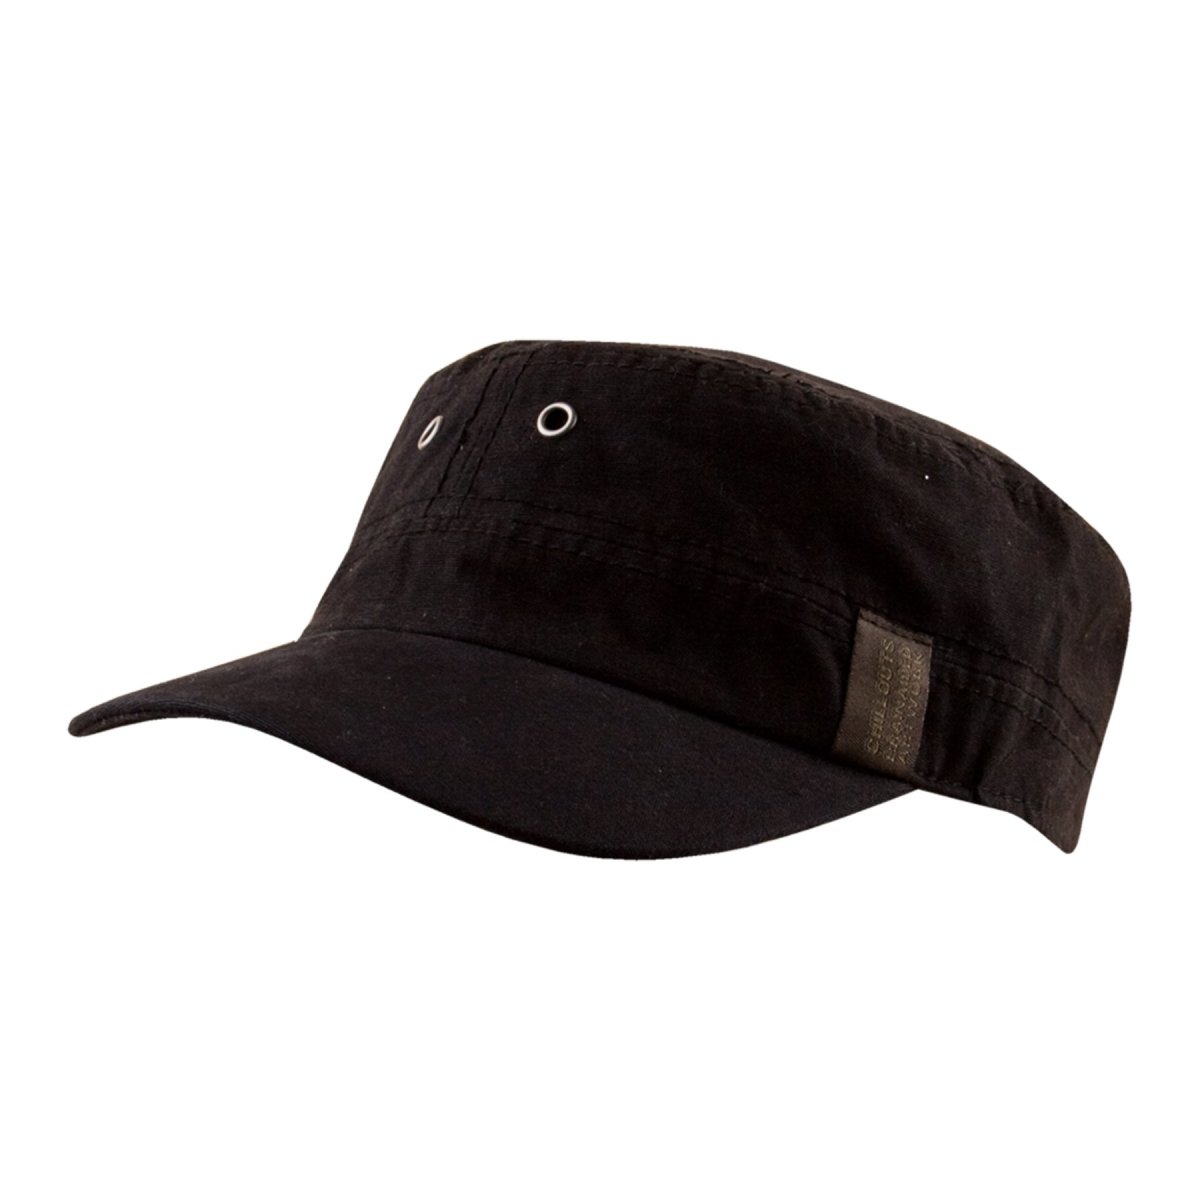 Military Cap Caps Funktionale Headwear - kaufen! aus 100% jetzt – Chillouts Baumwolle